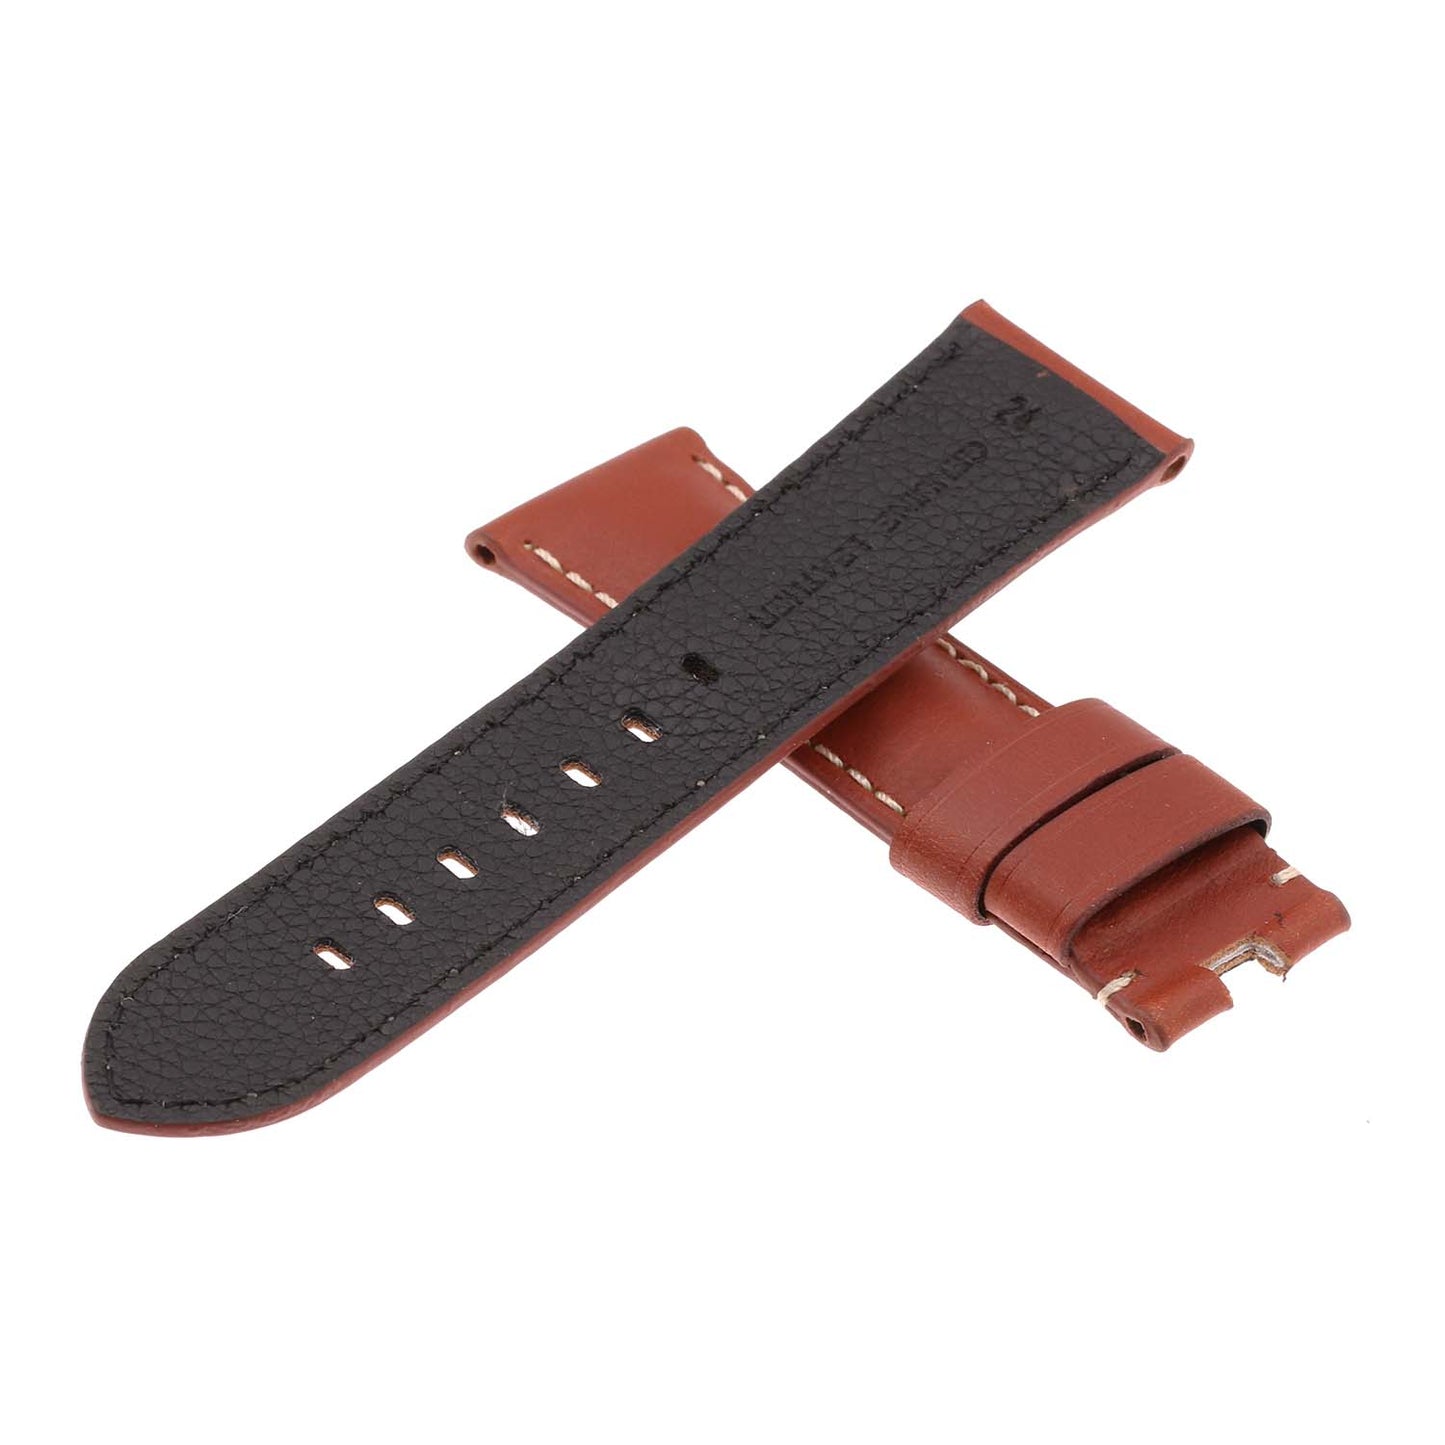 DASSARI Smooth Leather Strap w/ Black Deployant Clasp for Apple Watch